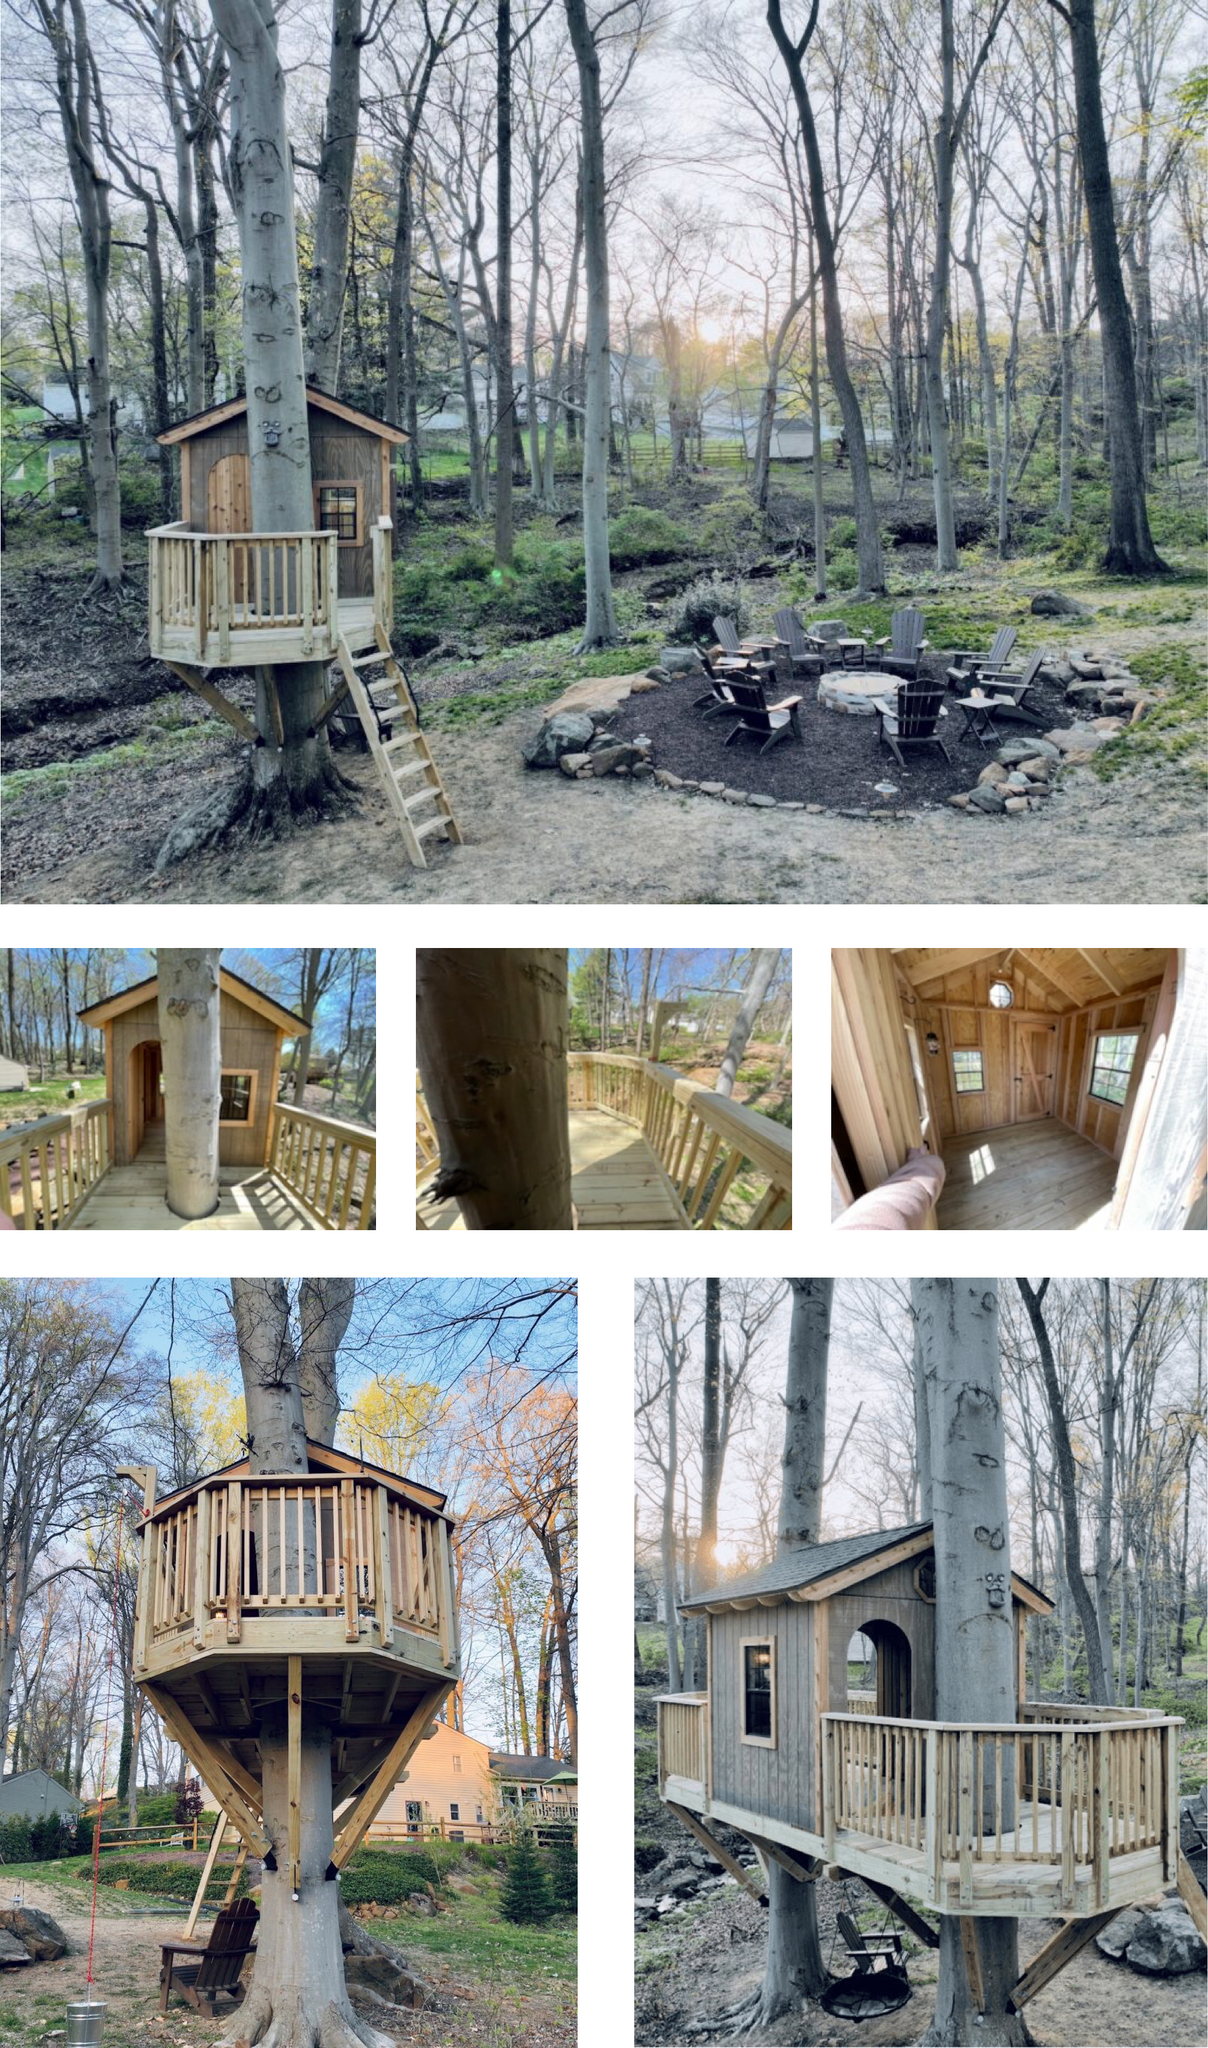 1 – Pennsylvania Treehouse